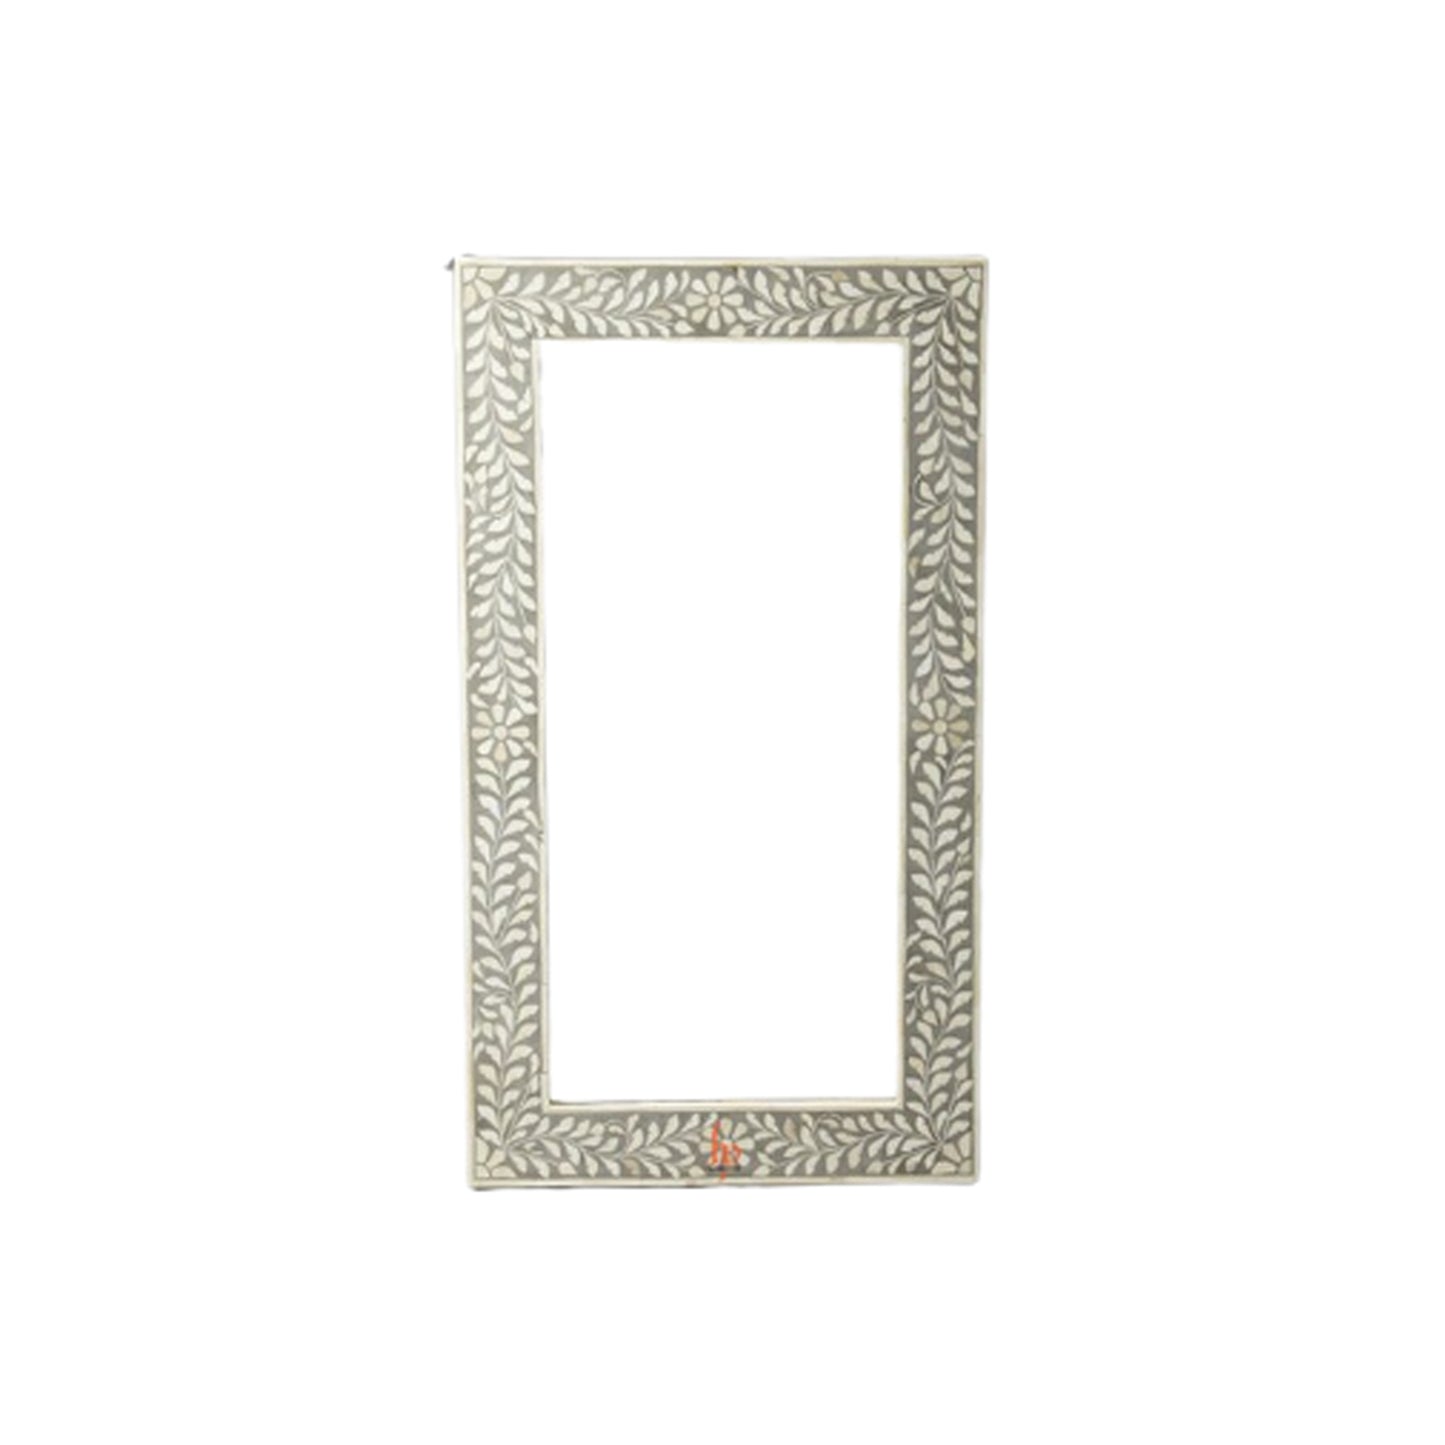 Handmade Bone Inlay Rectangle Shaped Mirror Frame Best Home Decor Wall Mirror